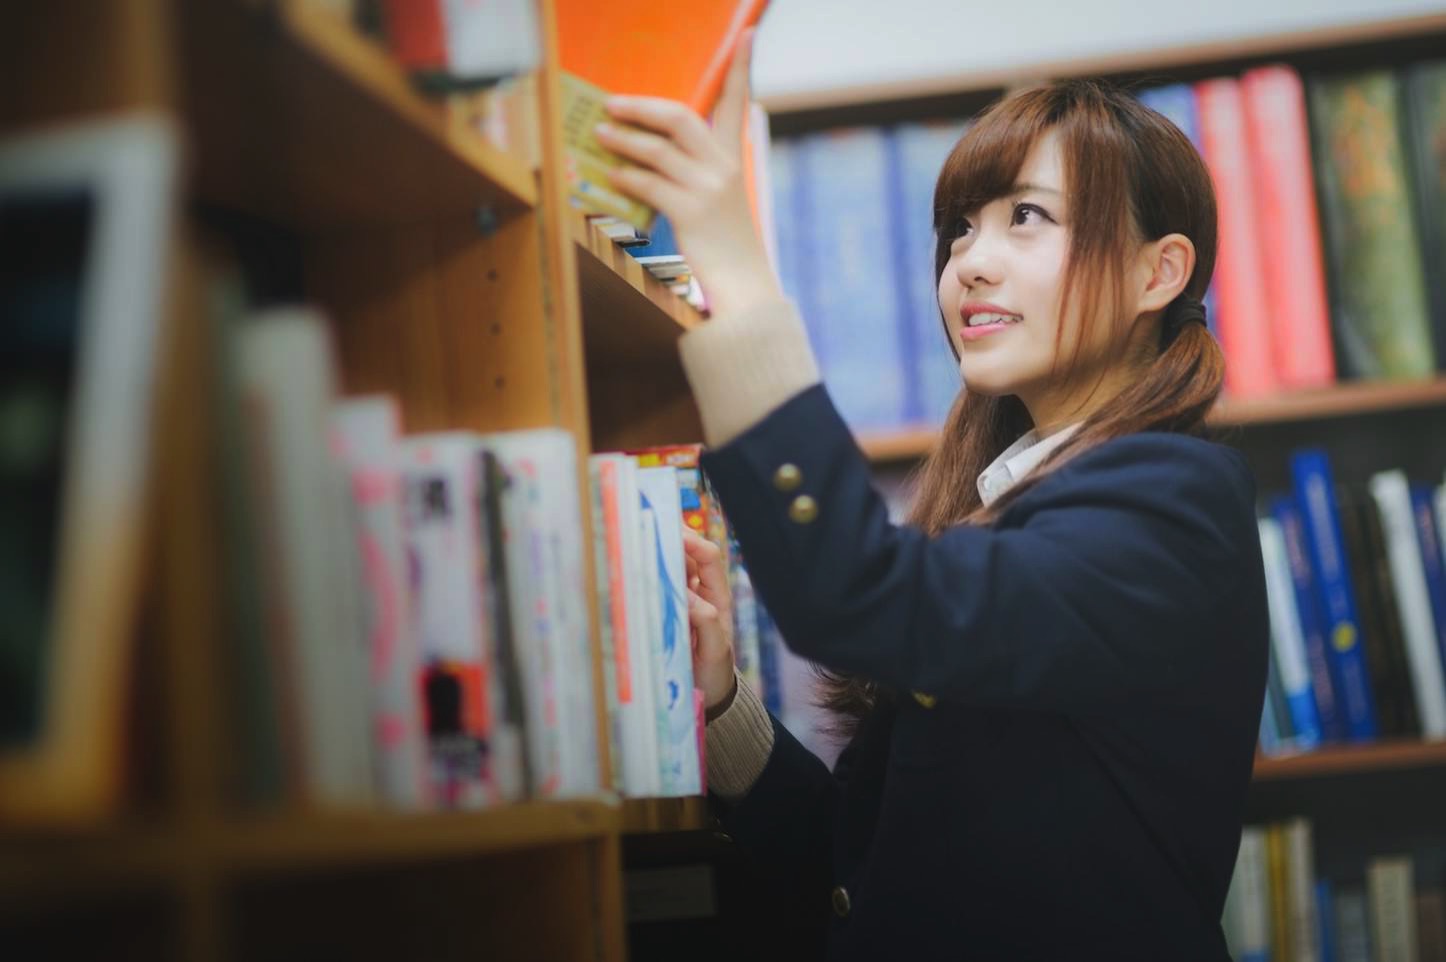 Yuka-getting-a-book-from-the-shelf.jpg